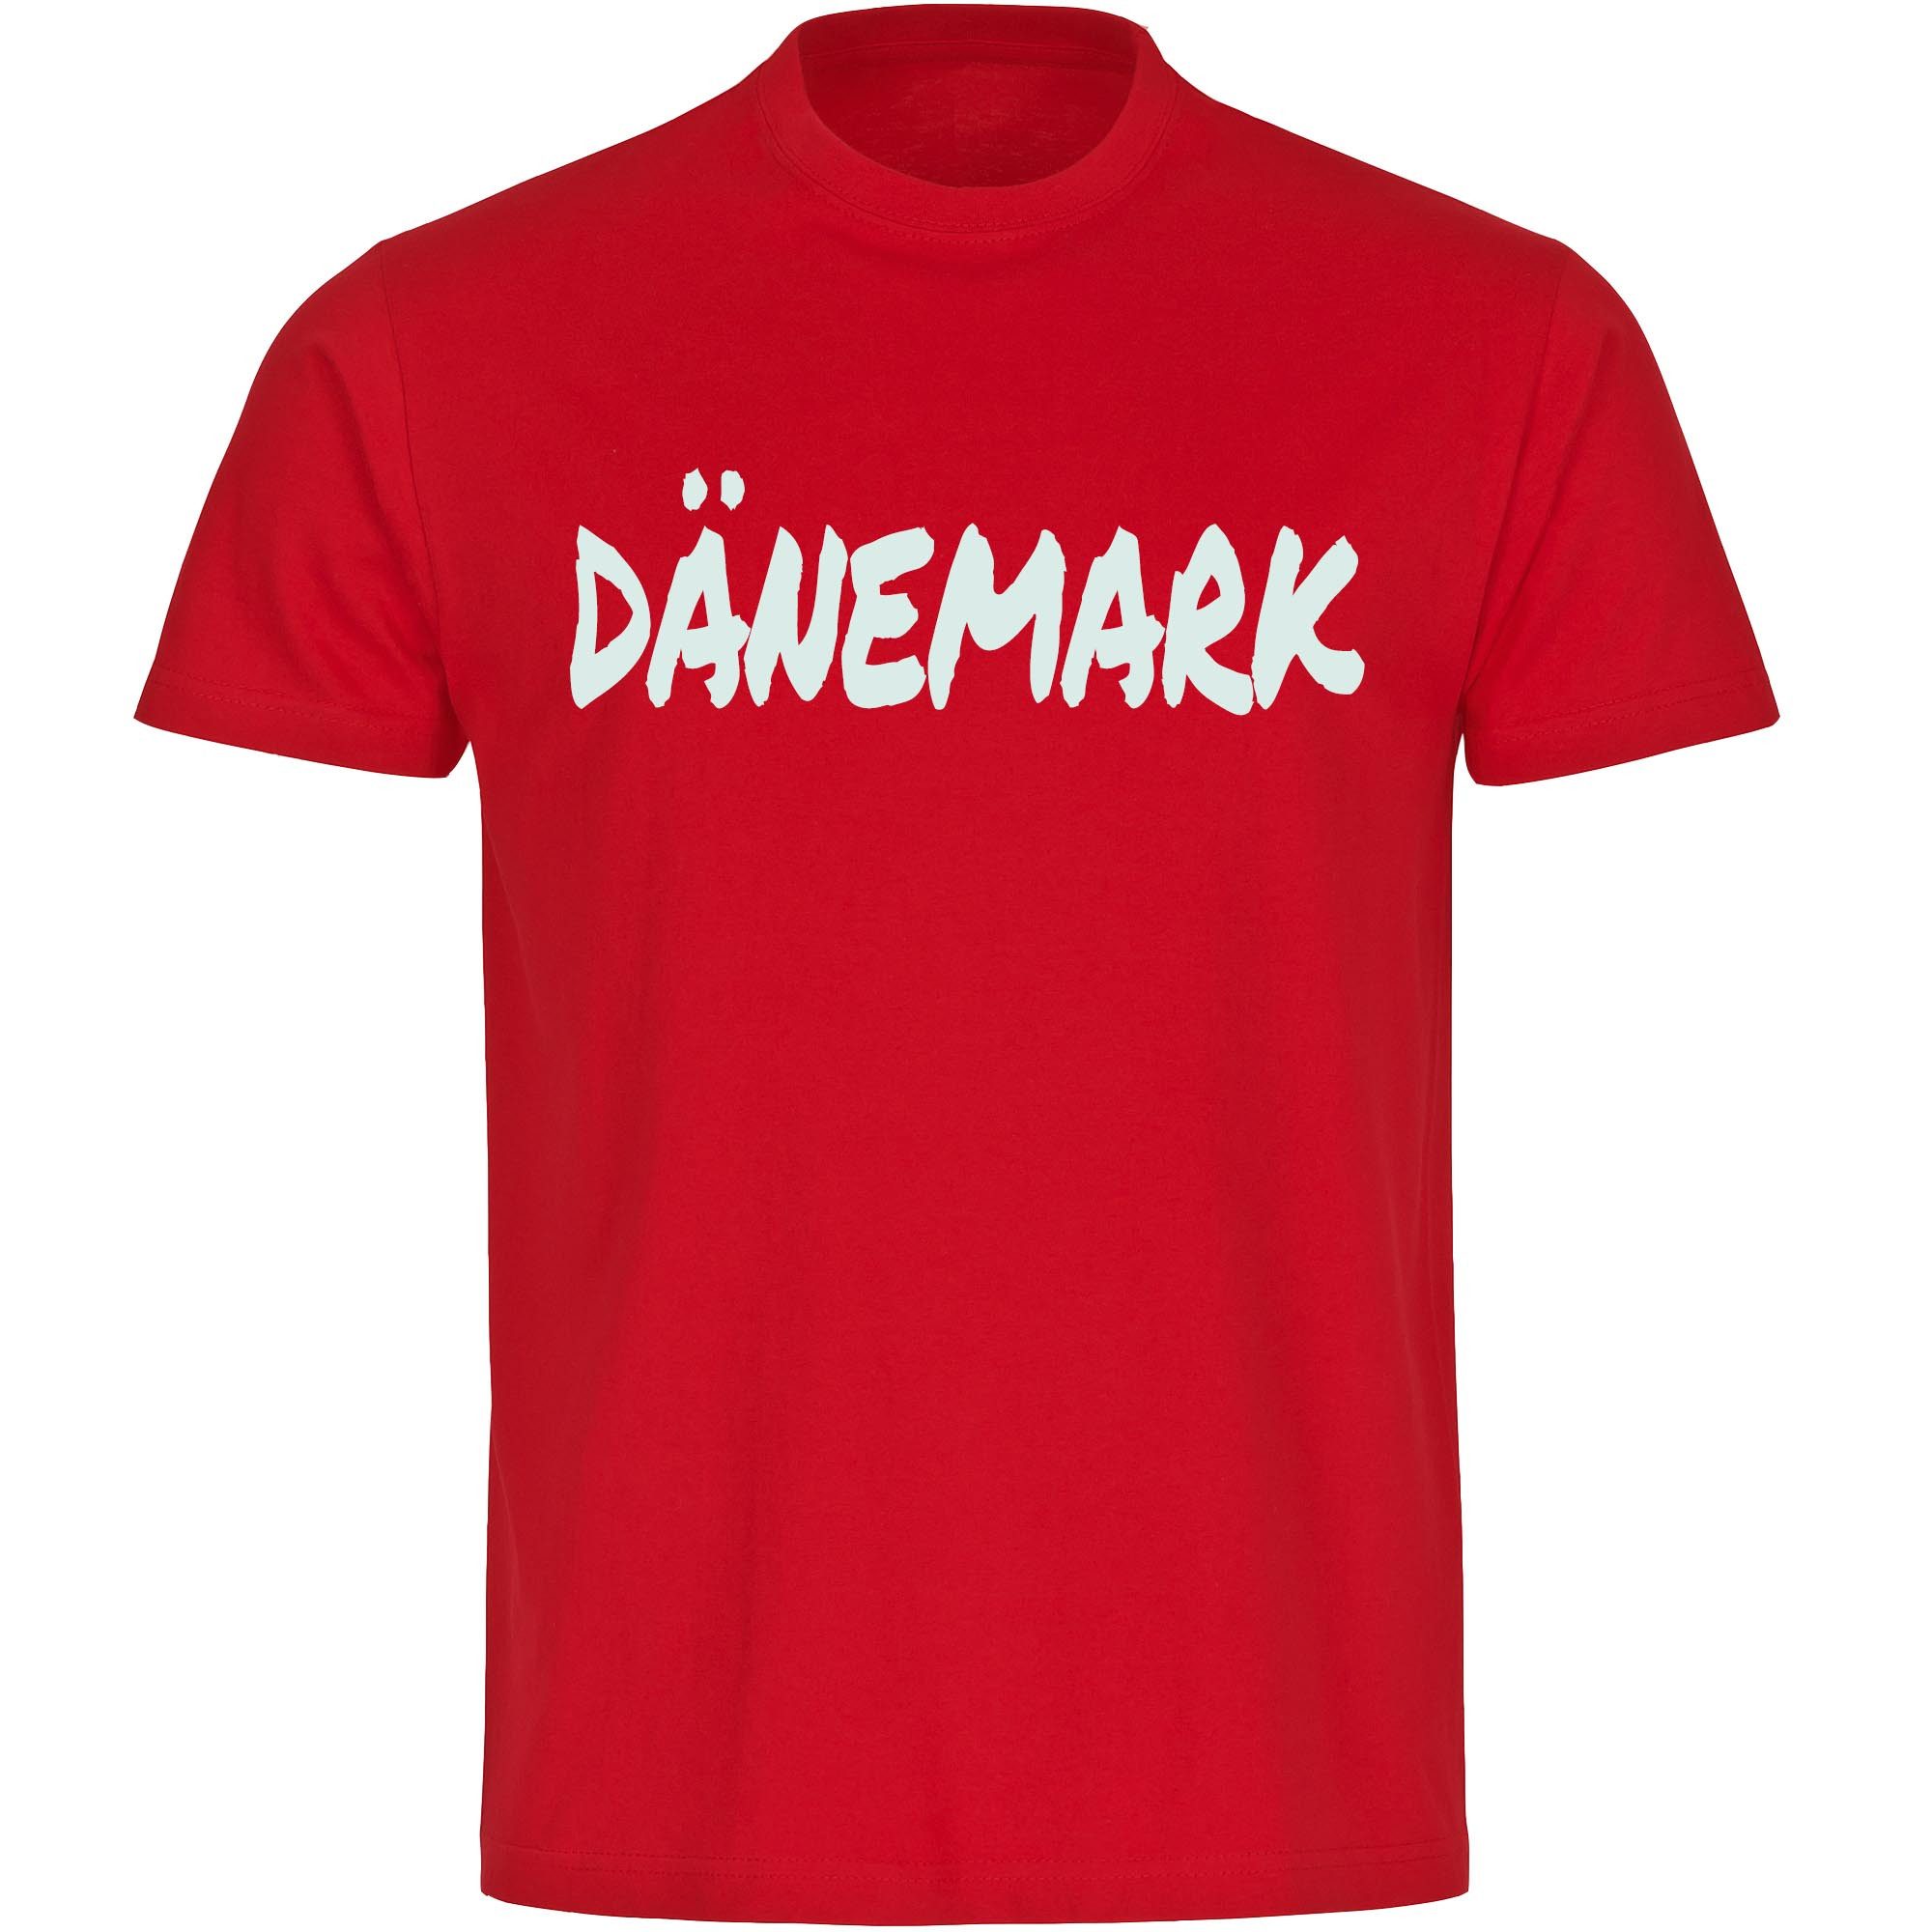 multifanshop T-Shirt Kinder Dänemark - Textmarker - Boy Girl